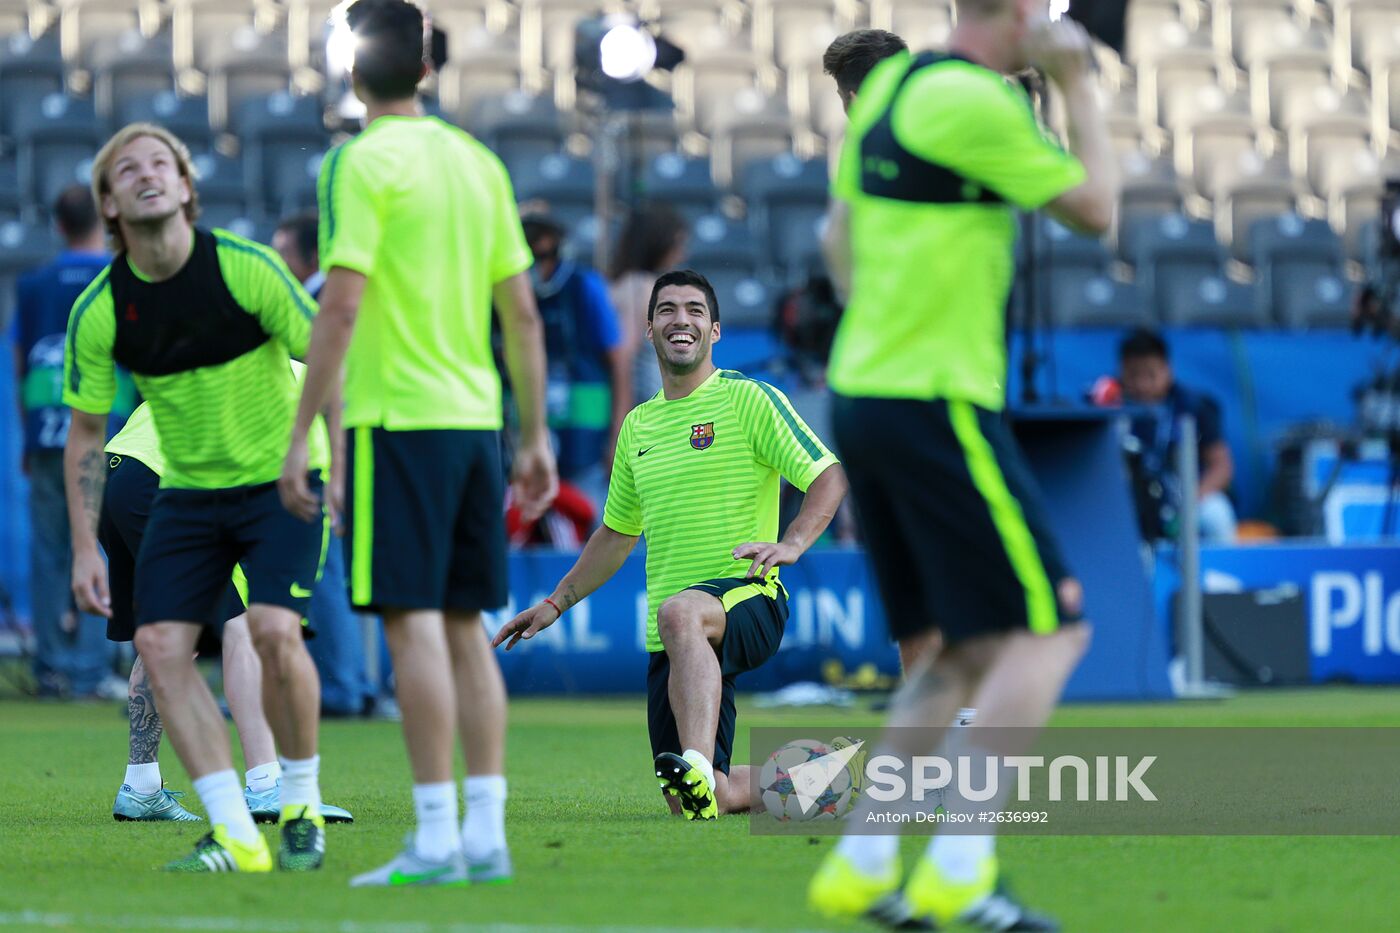 UEFA Champions League. FC Barcelona holds training session